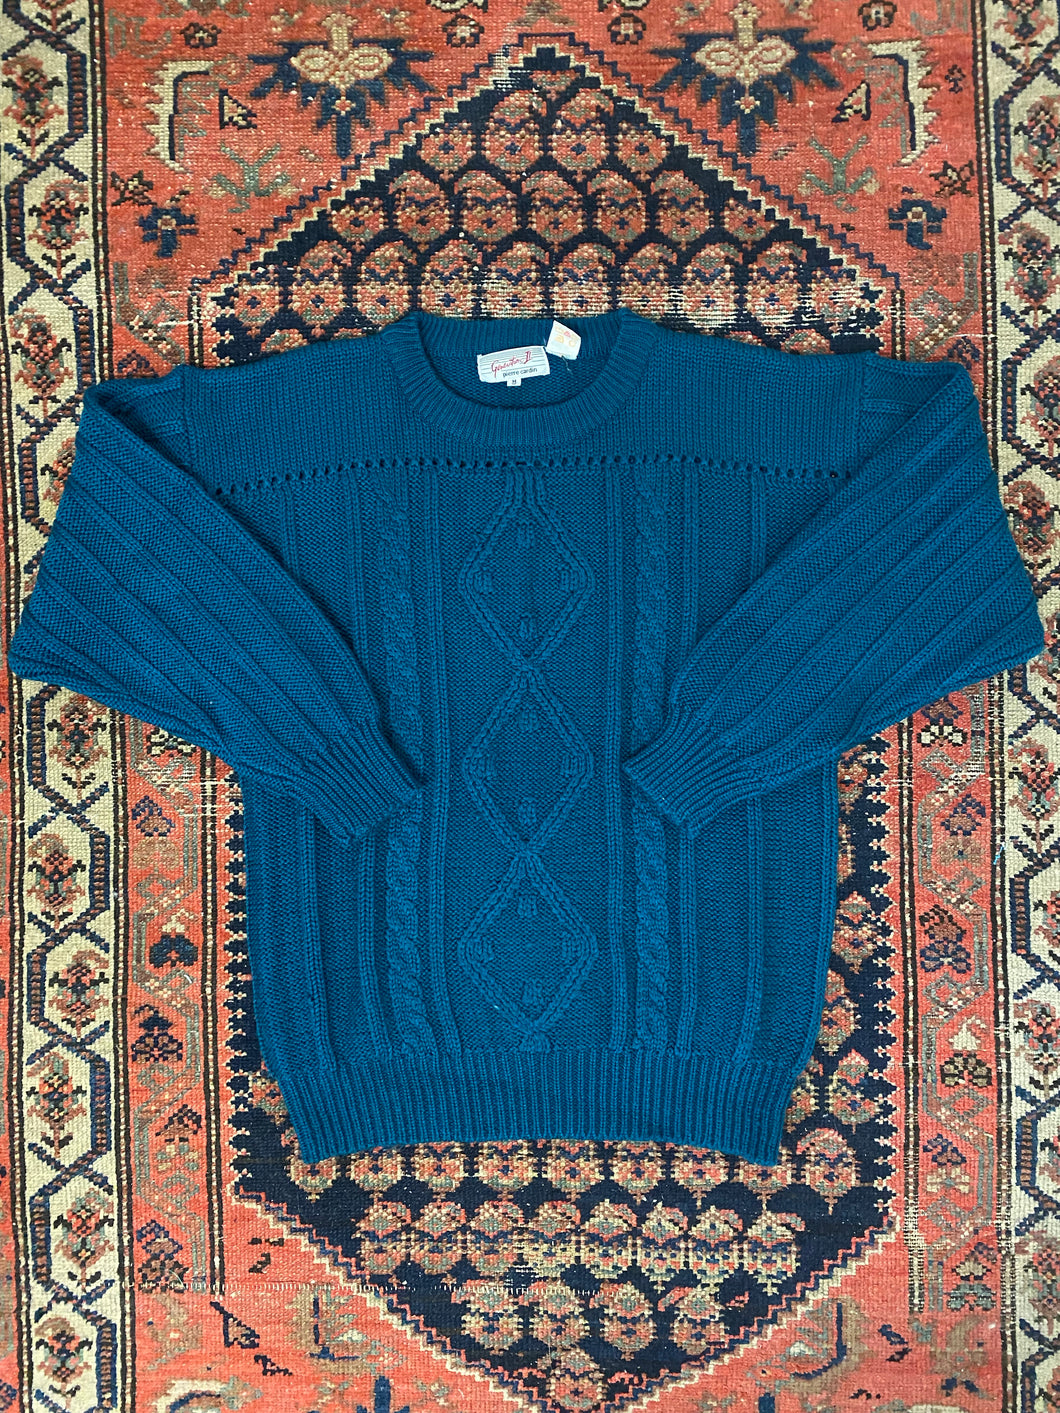 Vintage Blue Knit Sweater - M